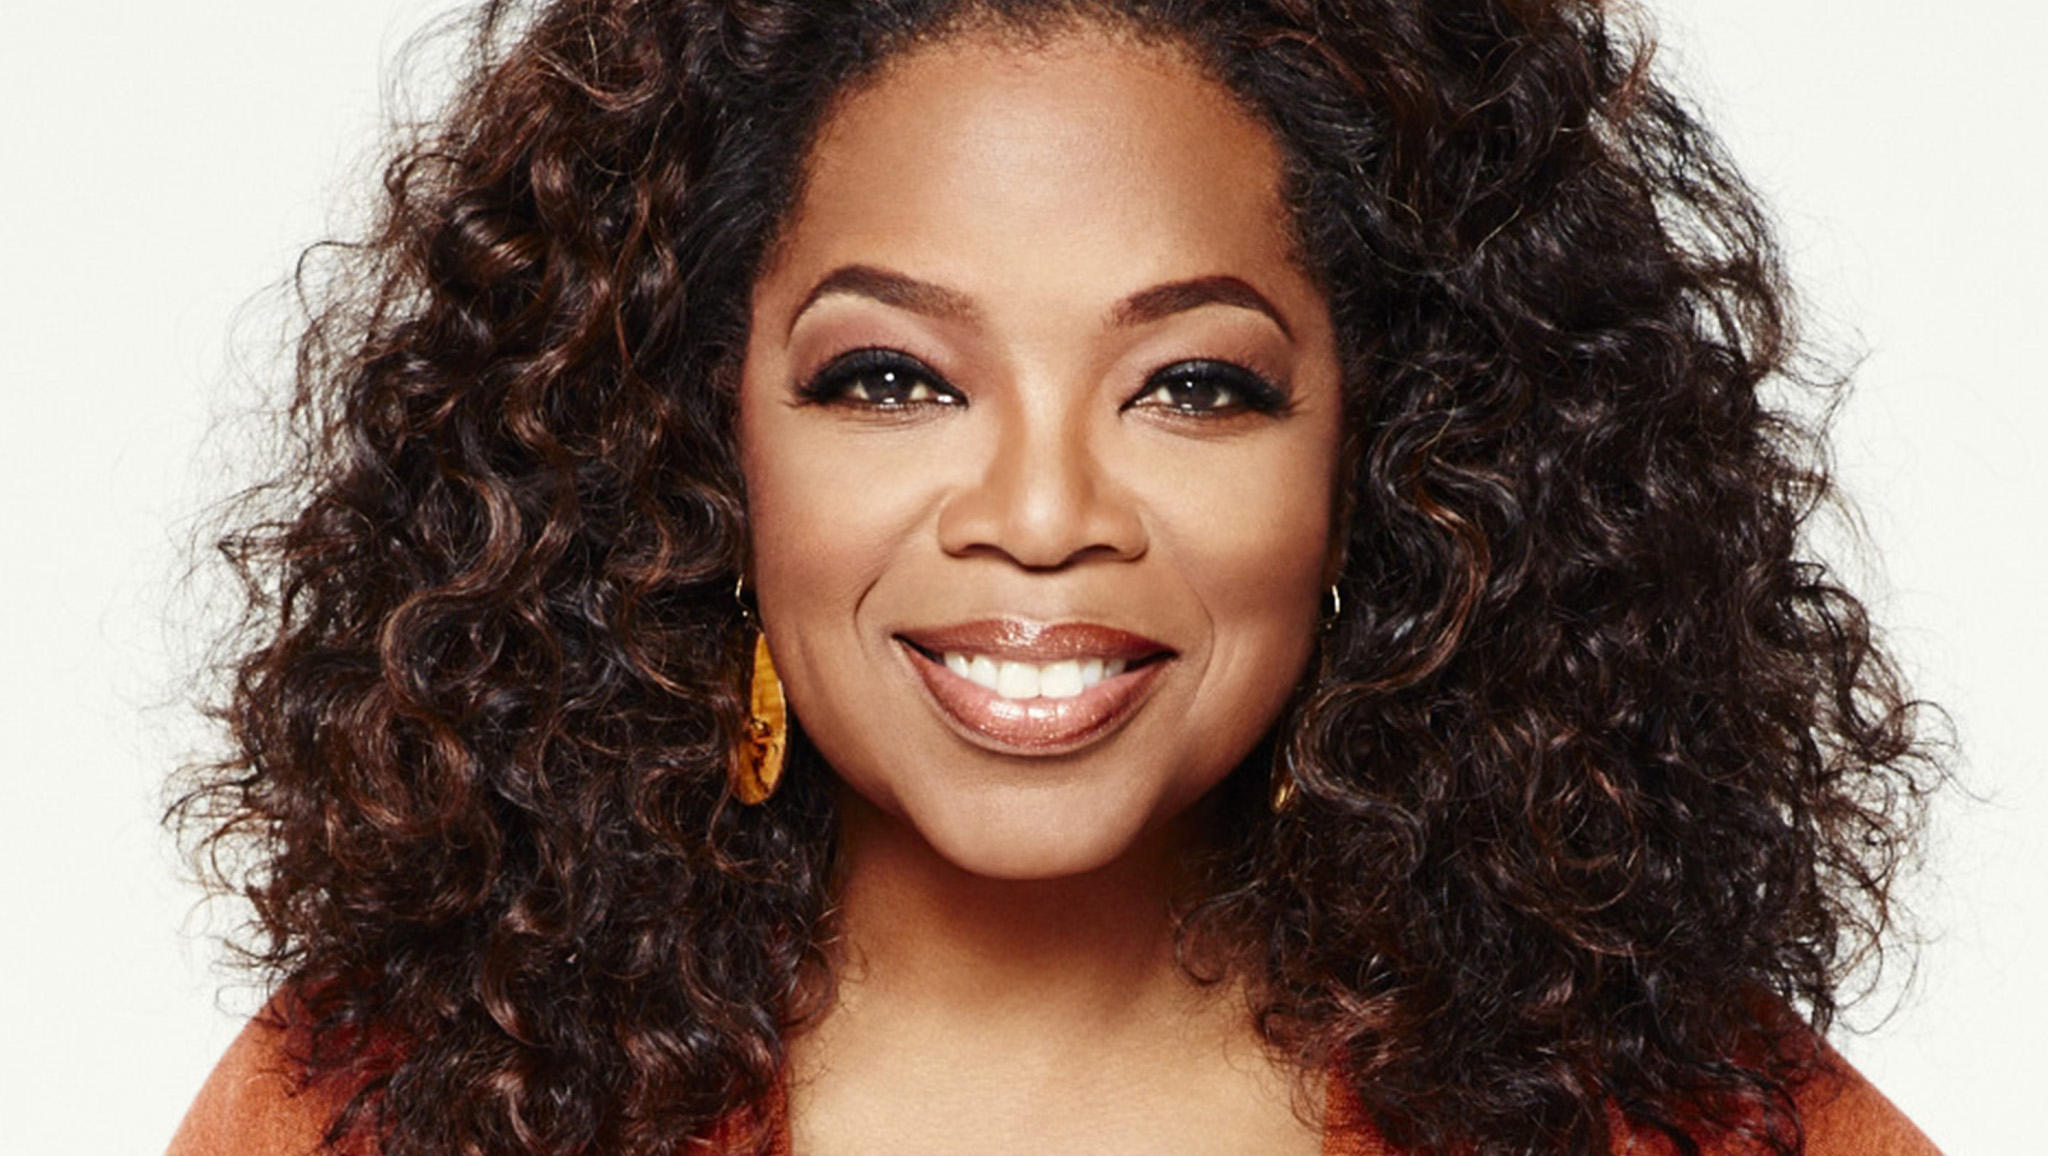 Oprah Winfrey ightψος, βάρος, ηλικία, στατιστικές σώματος